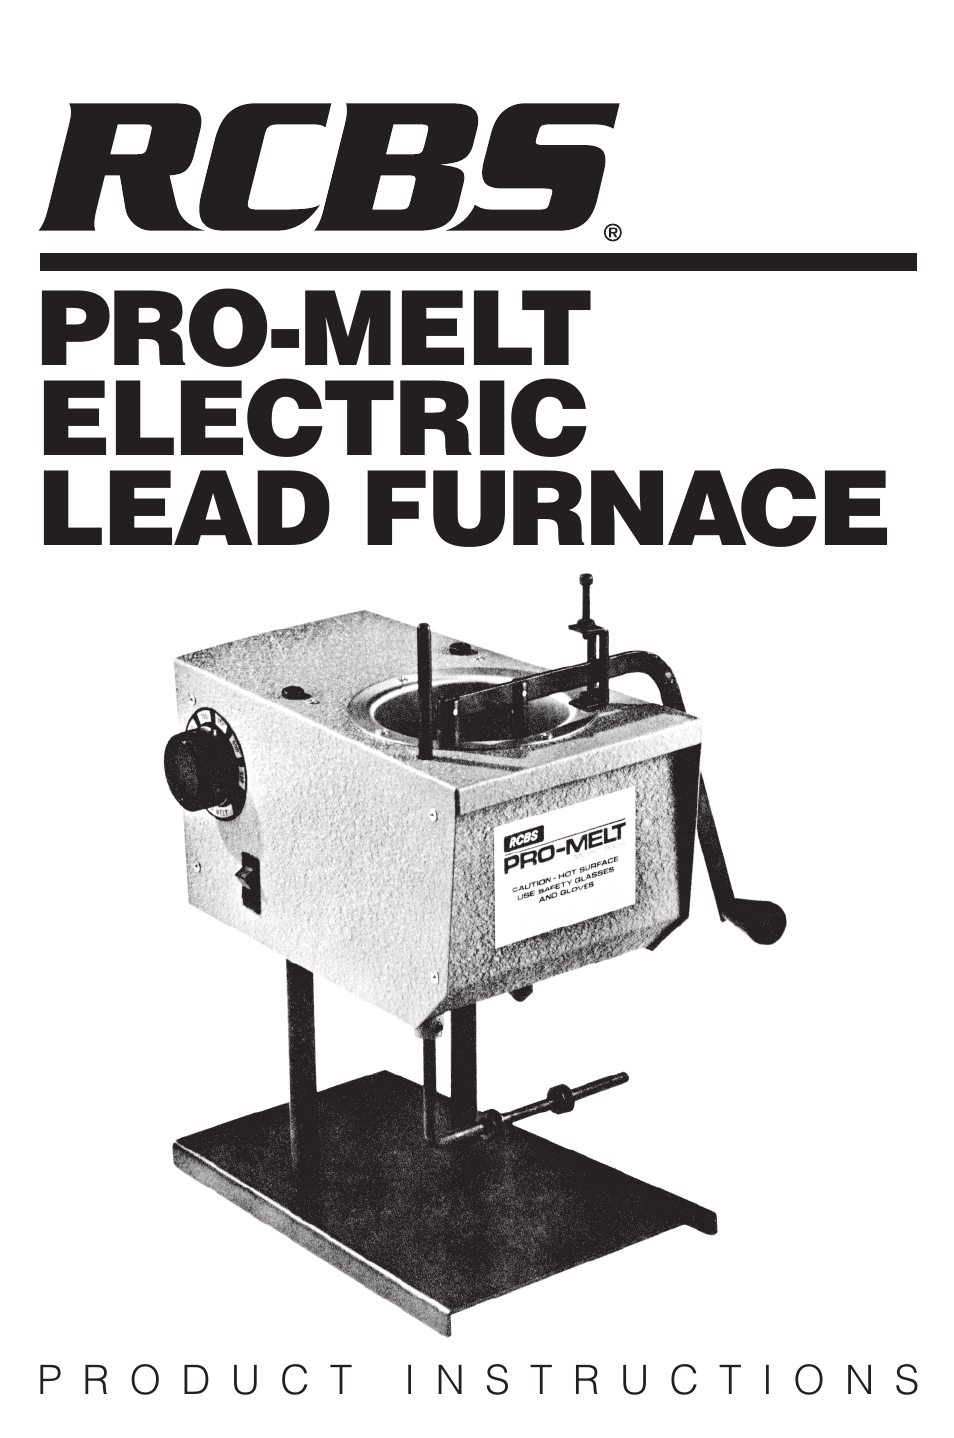 ProMelt Electric Lead Furnace